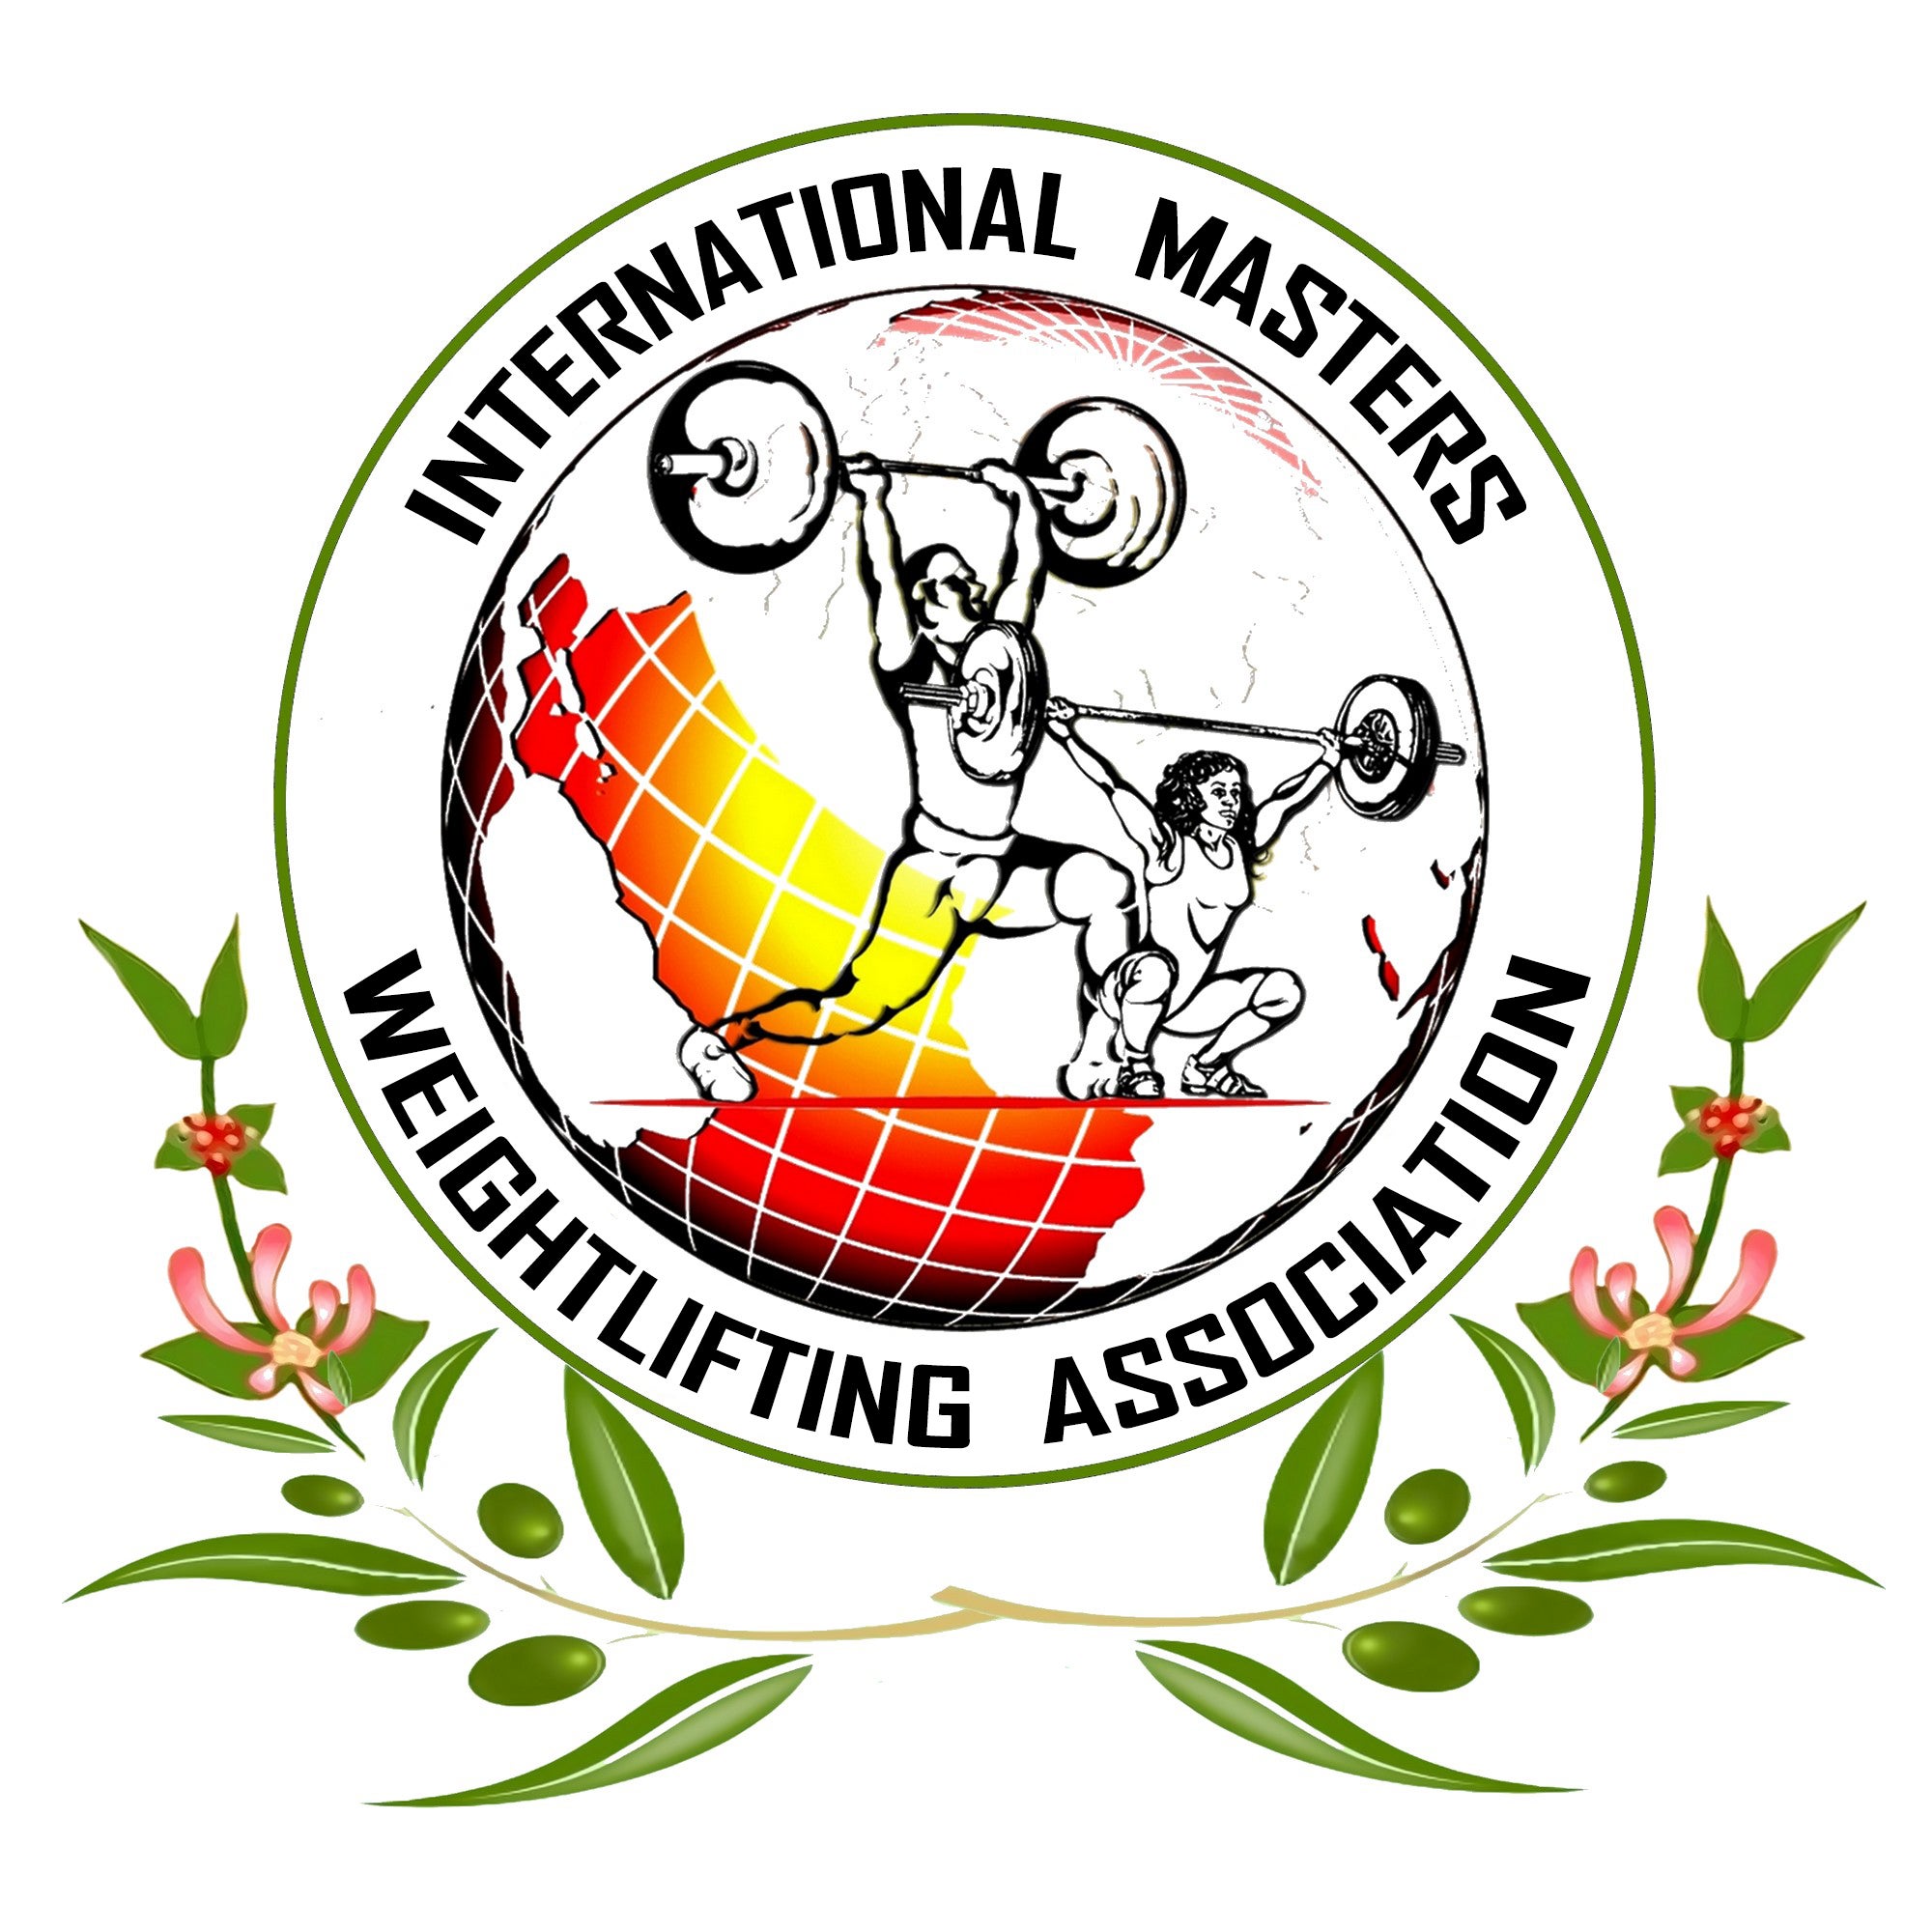 The Masters Program - istep mentors